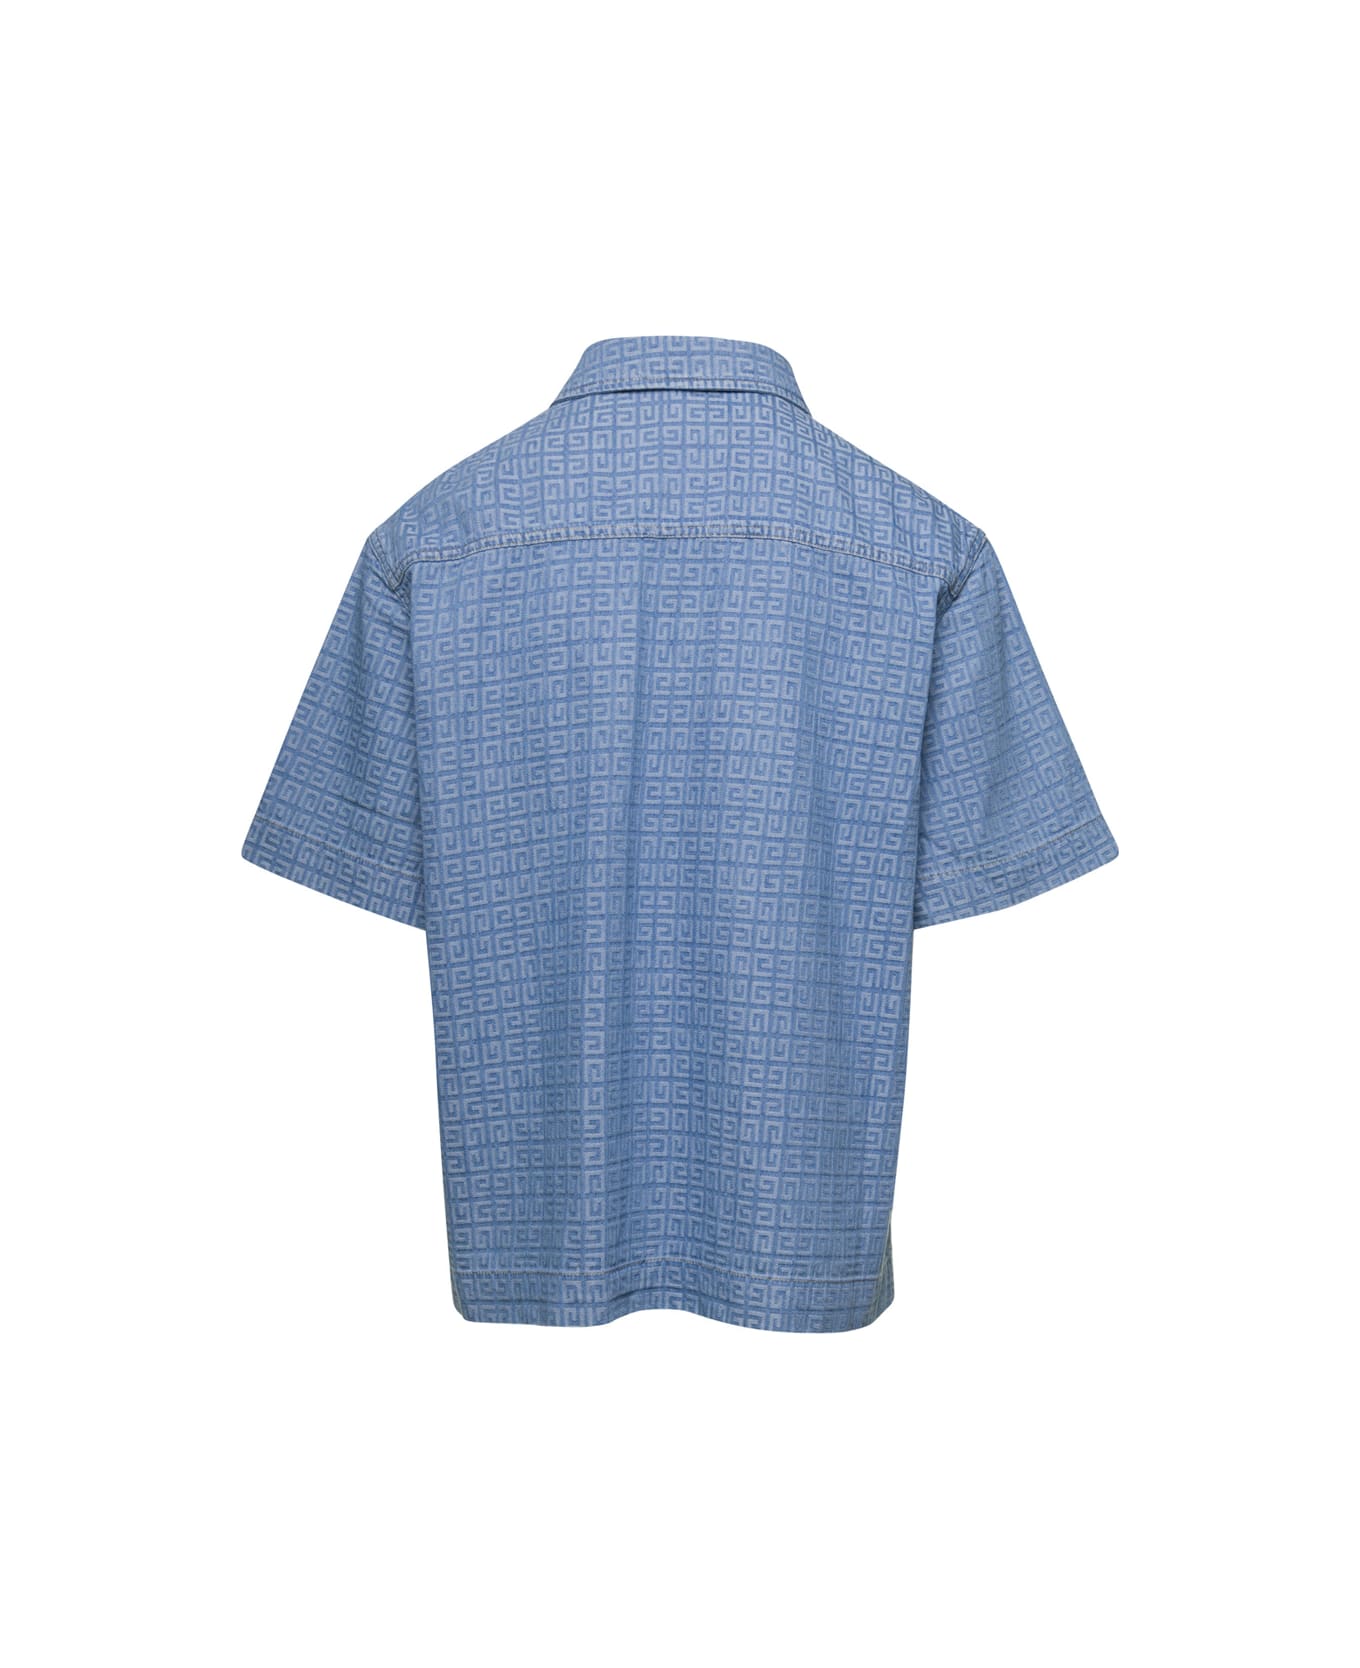 Givenchy Light-blue Denim Boxy Shirt With Monogram Motif In Cotton Man - Blu